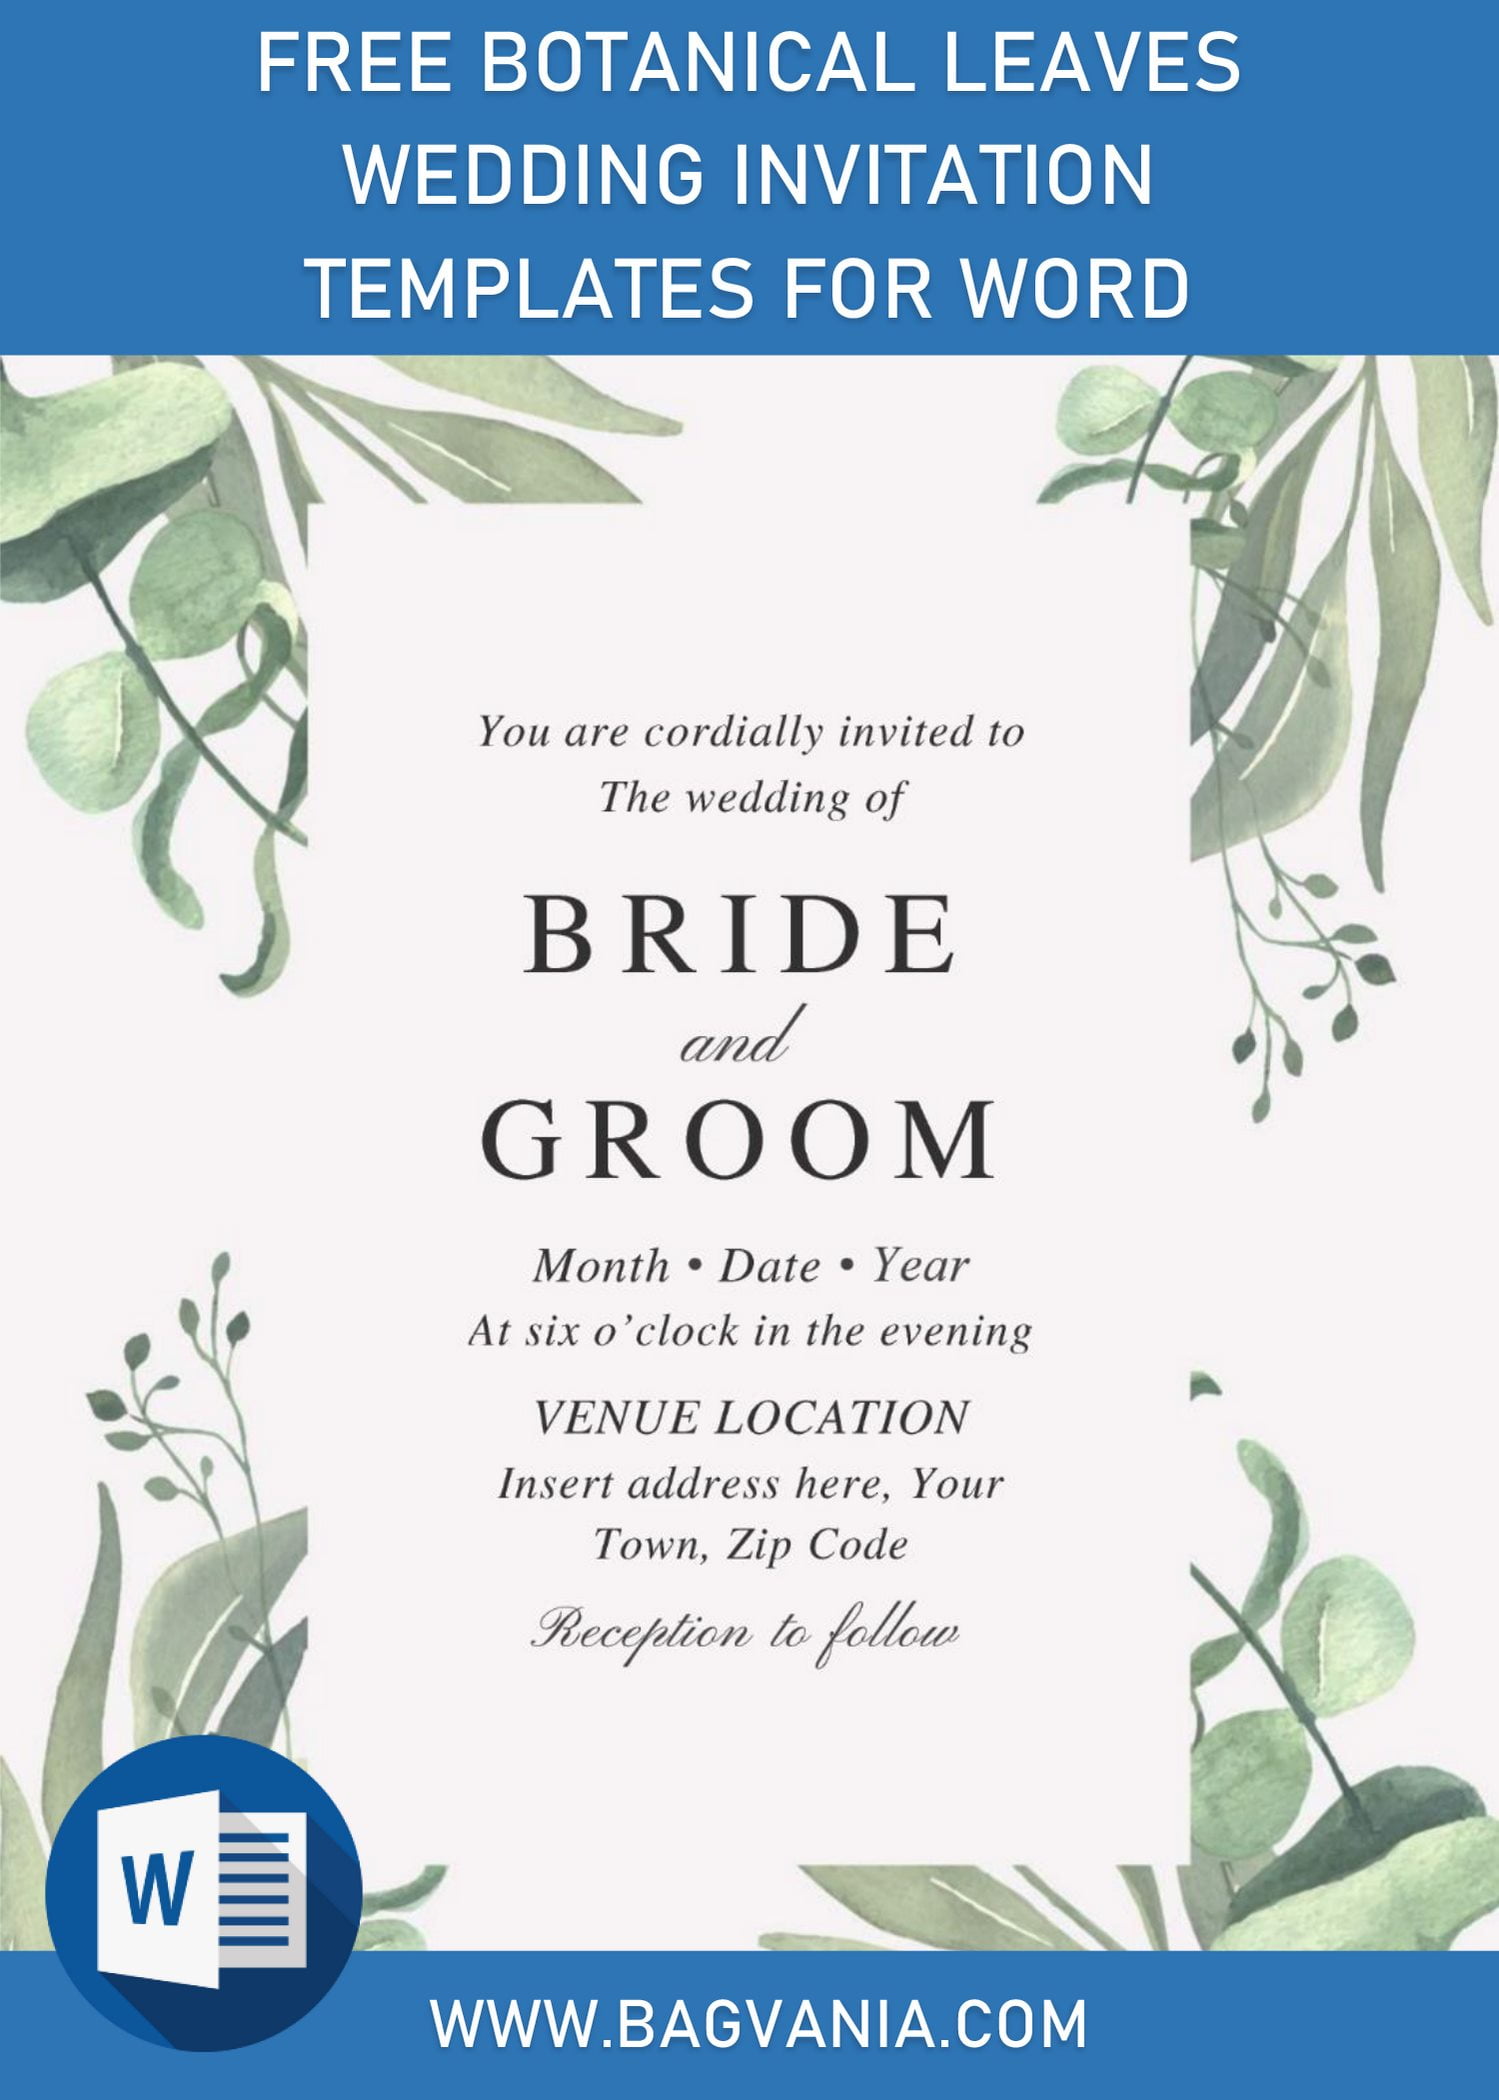 Free Botanical Leaves Wedding Invitation Templates For Word | FREE ...